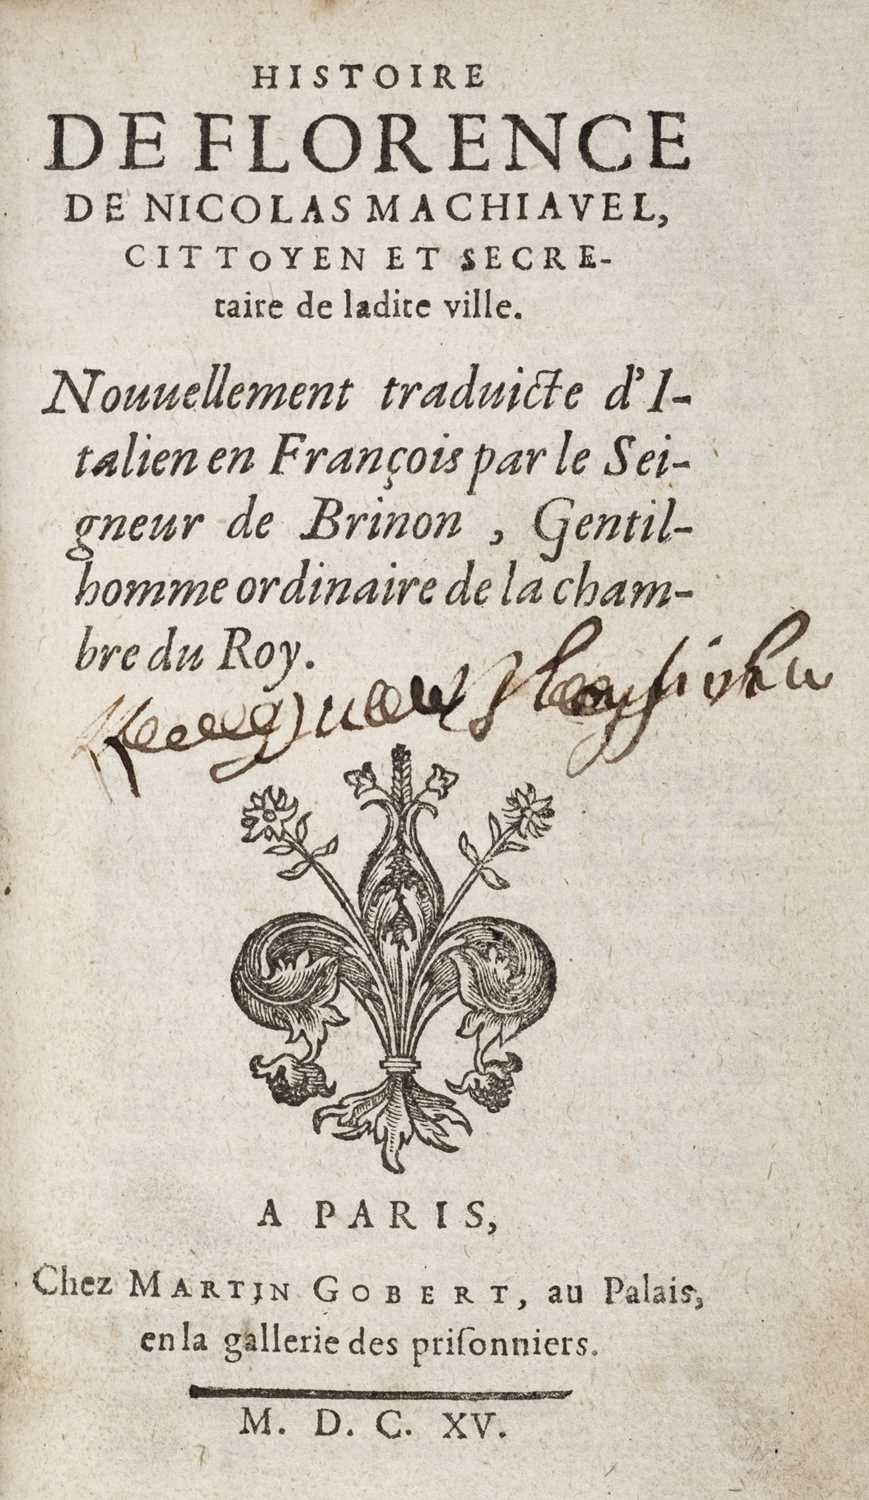 Lot 531 - Machiavel (Nicolas). Histoire de Florence, Paris: Martin Gobert, 1615